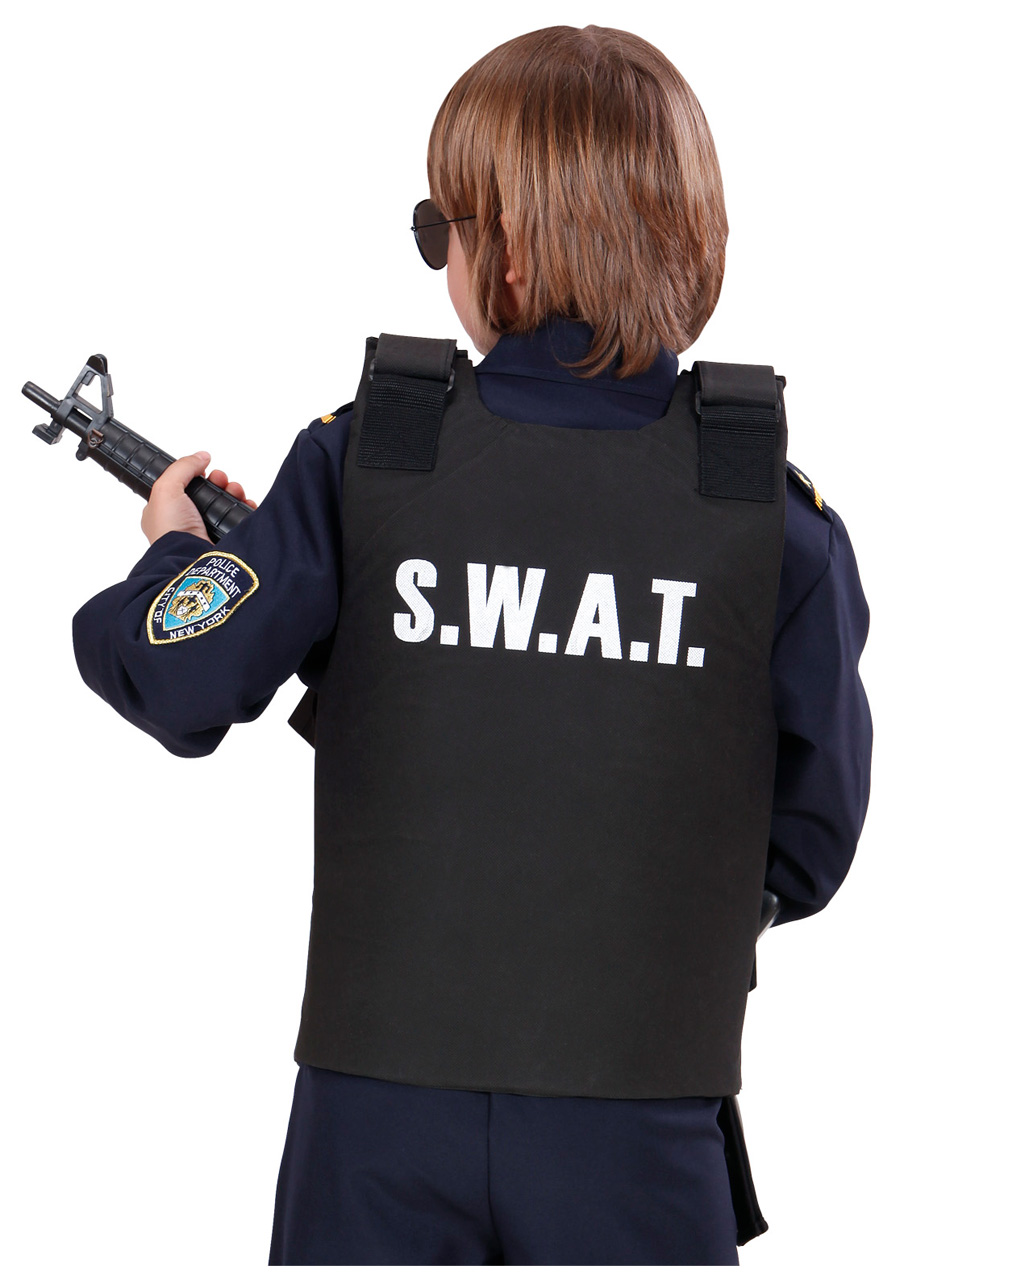 Buy [Catsobat] SWAT Vest for Kids Halloween Costume Special Forces